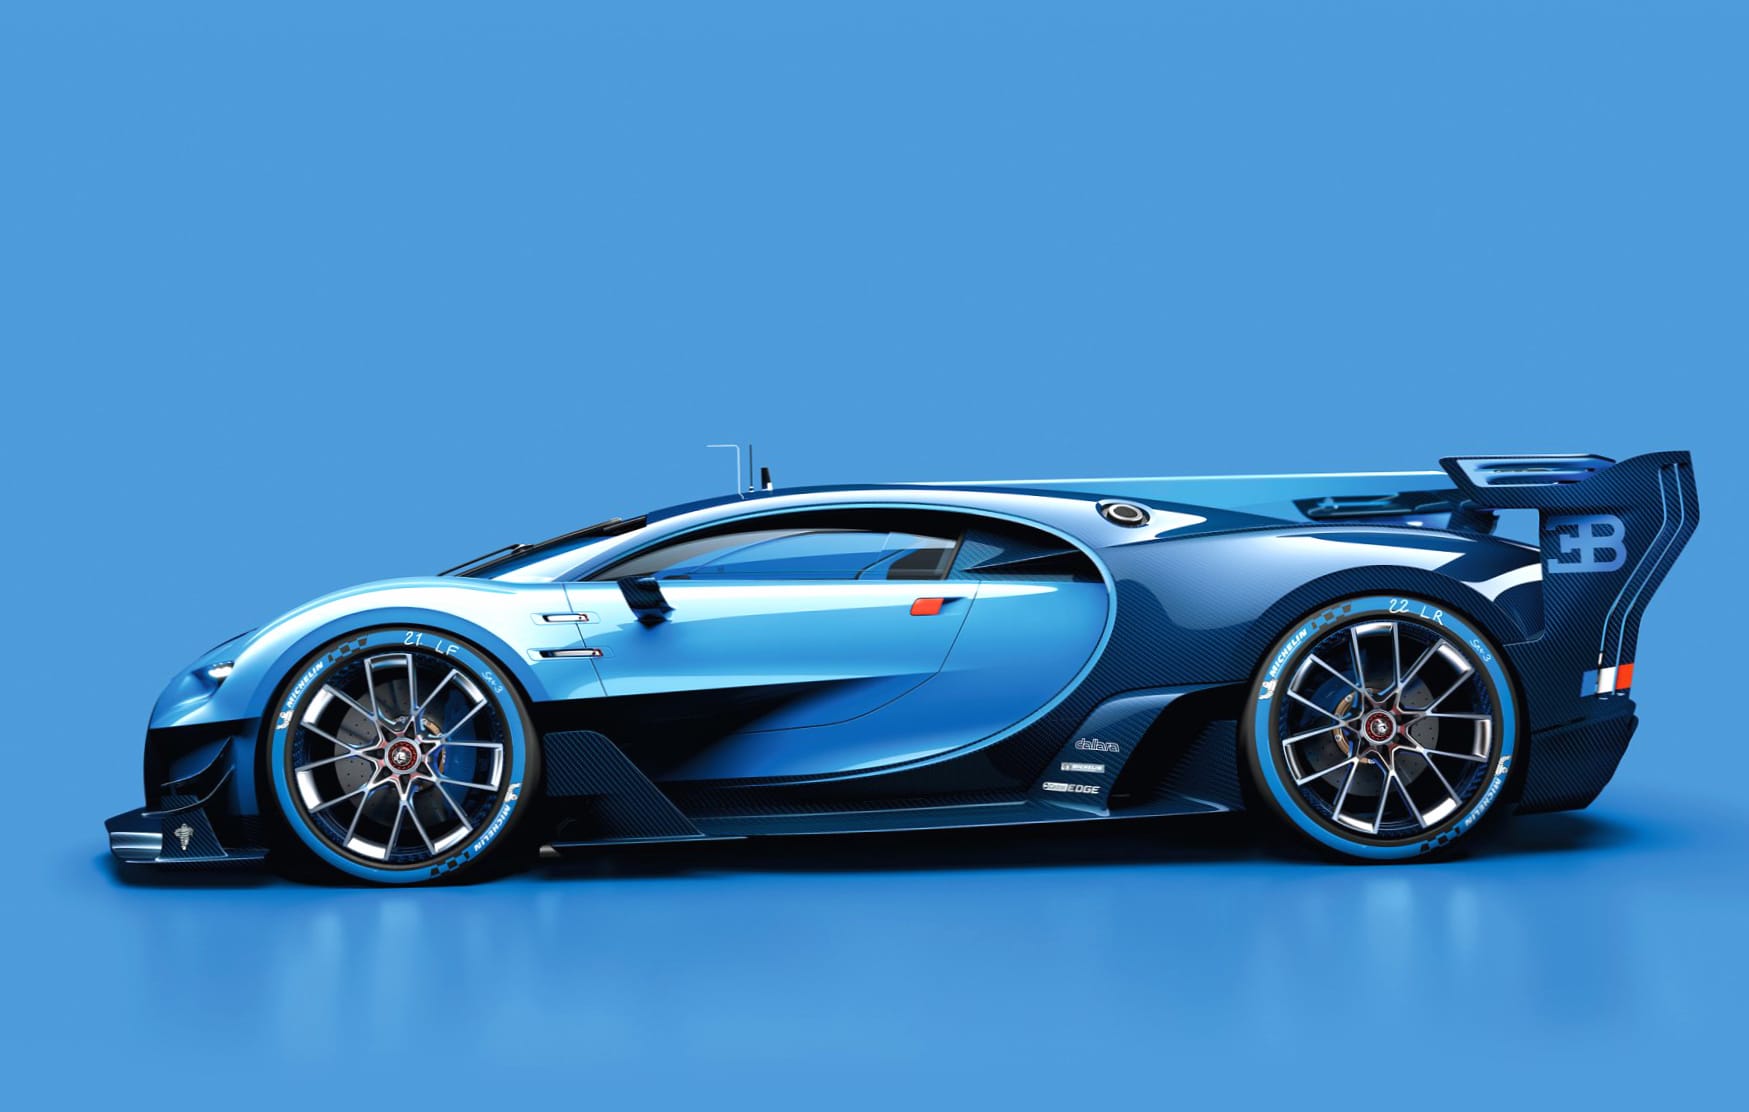 Bugatti Vision Gran Turismo at 1024 x 1024 iPad size wallpapers HD quality